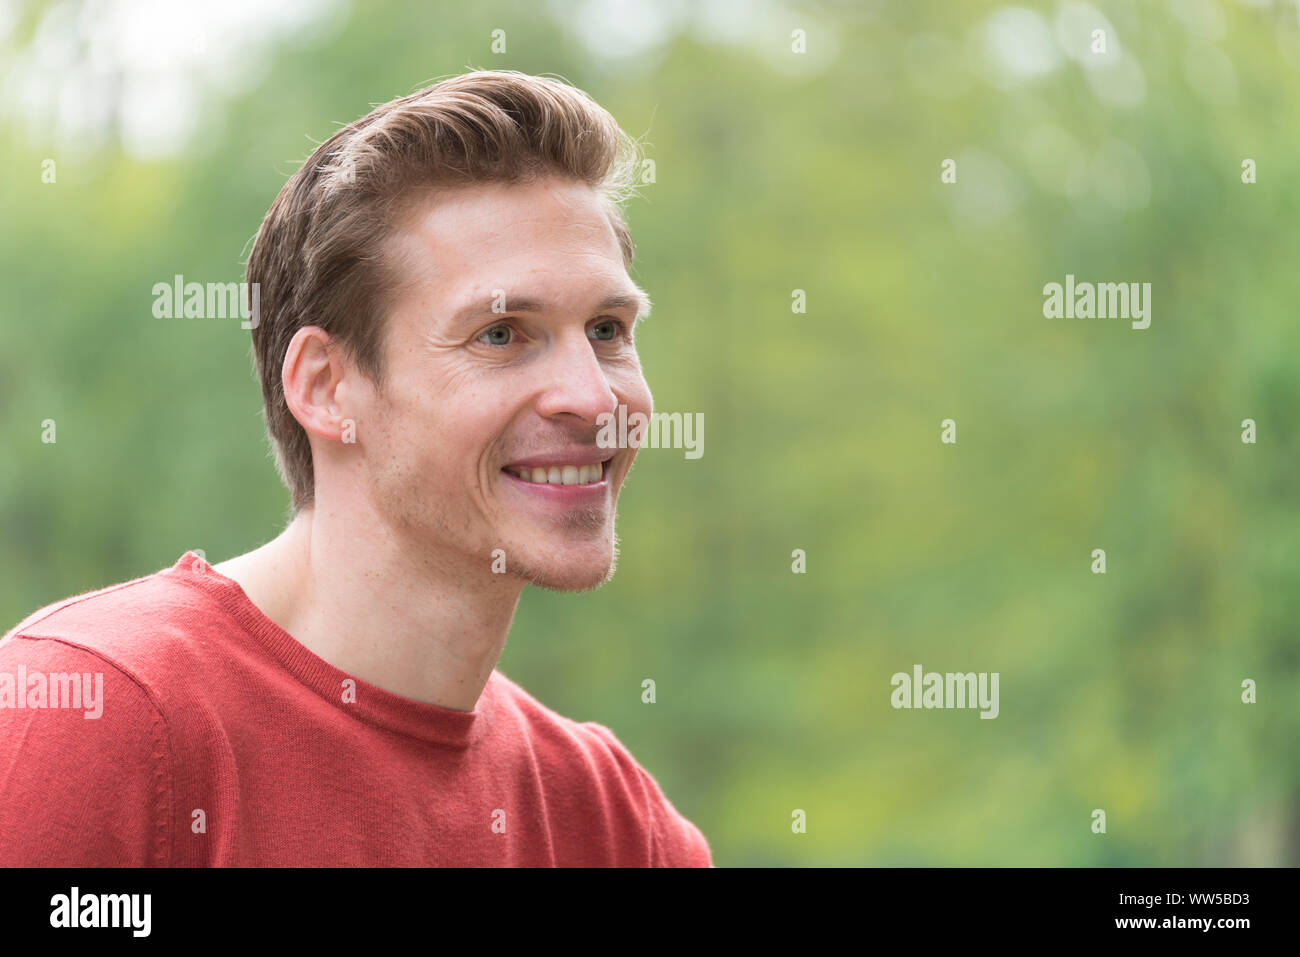 Man in red sweater, looking sideways, portrait, Stock Photo